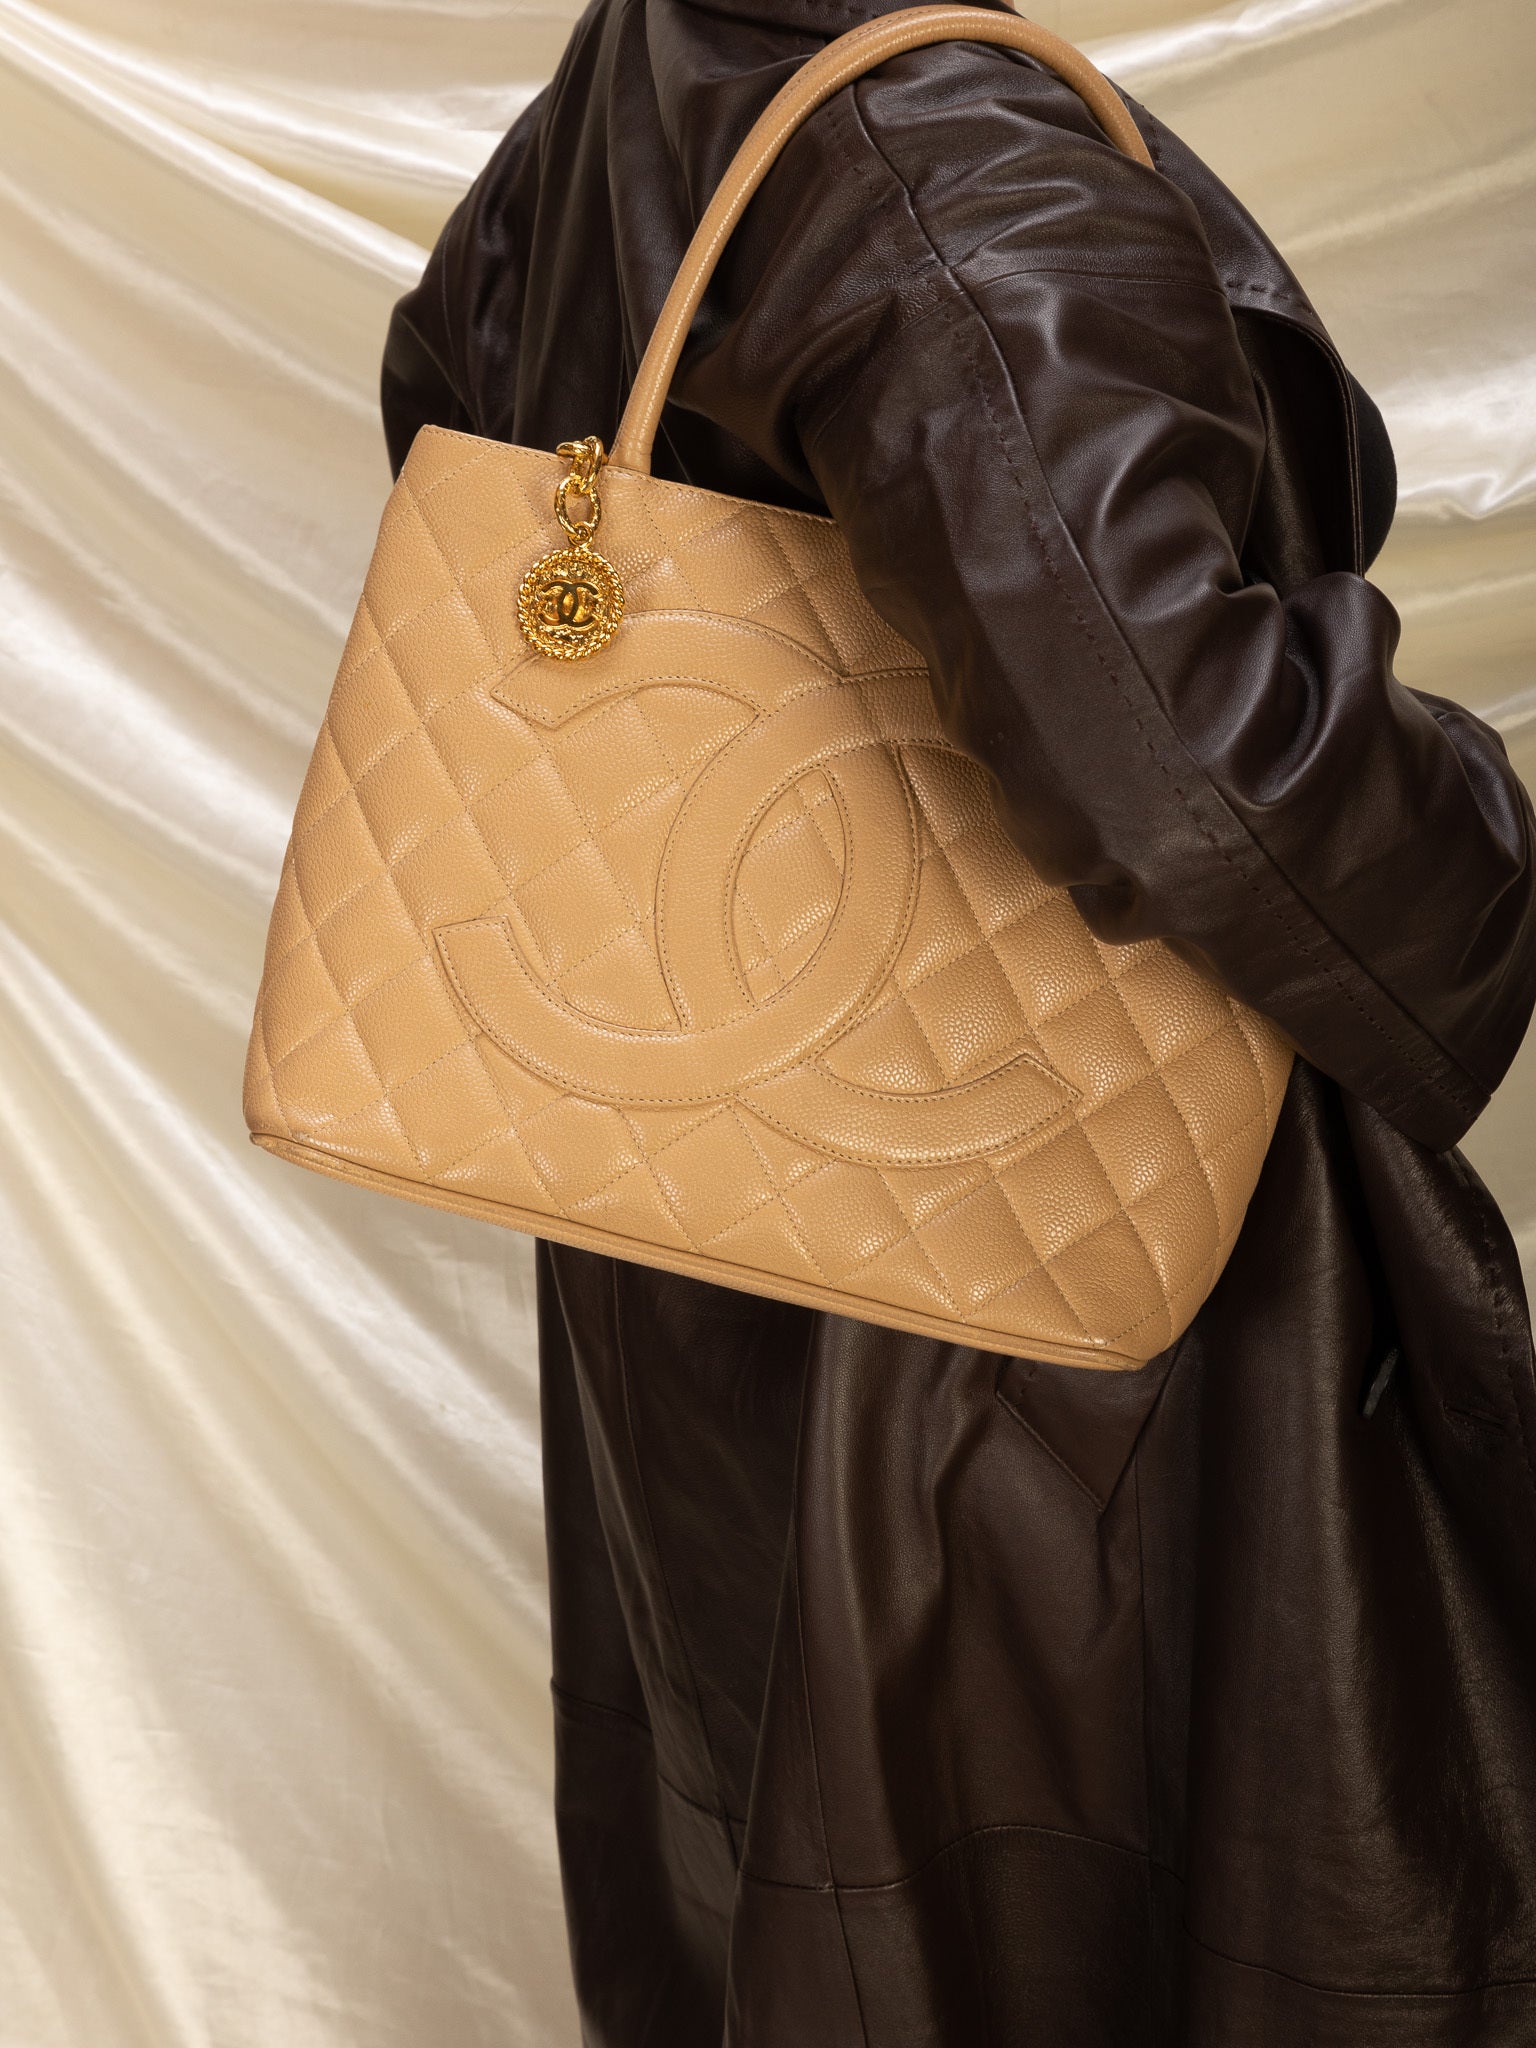 Chanel Medallion tote in Black Caviar Leather – Bag Religion